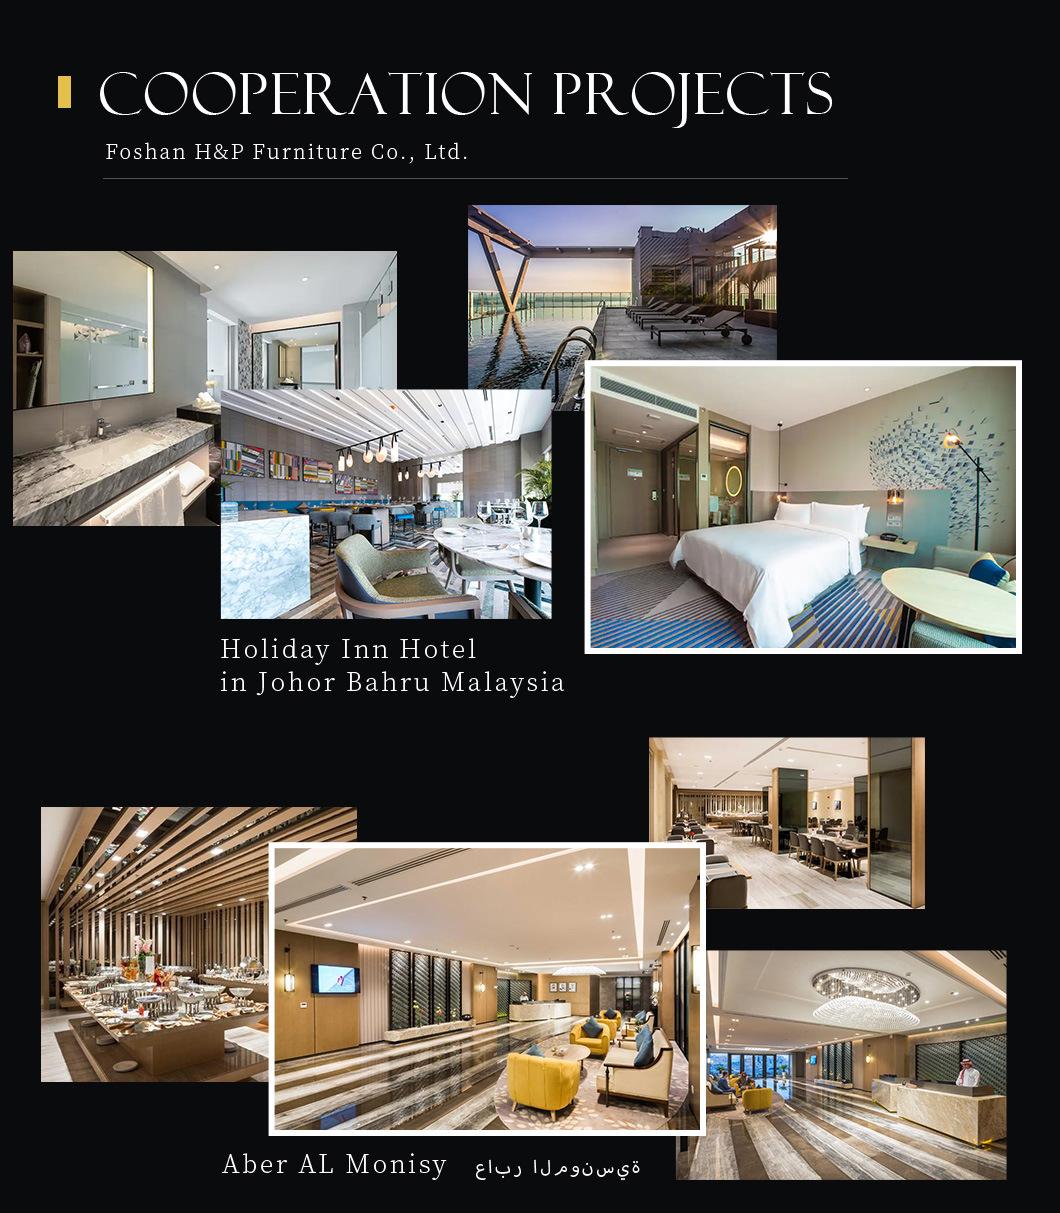 Thailand Project 5 Star Luxury Modern Bedroom Design Marriott Hotel Furniture Manufactured